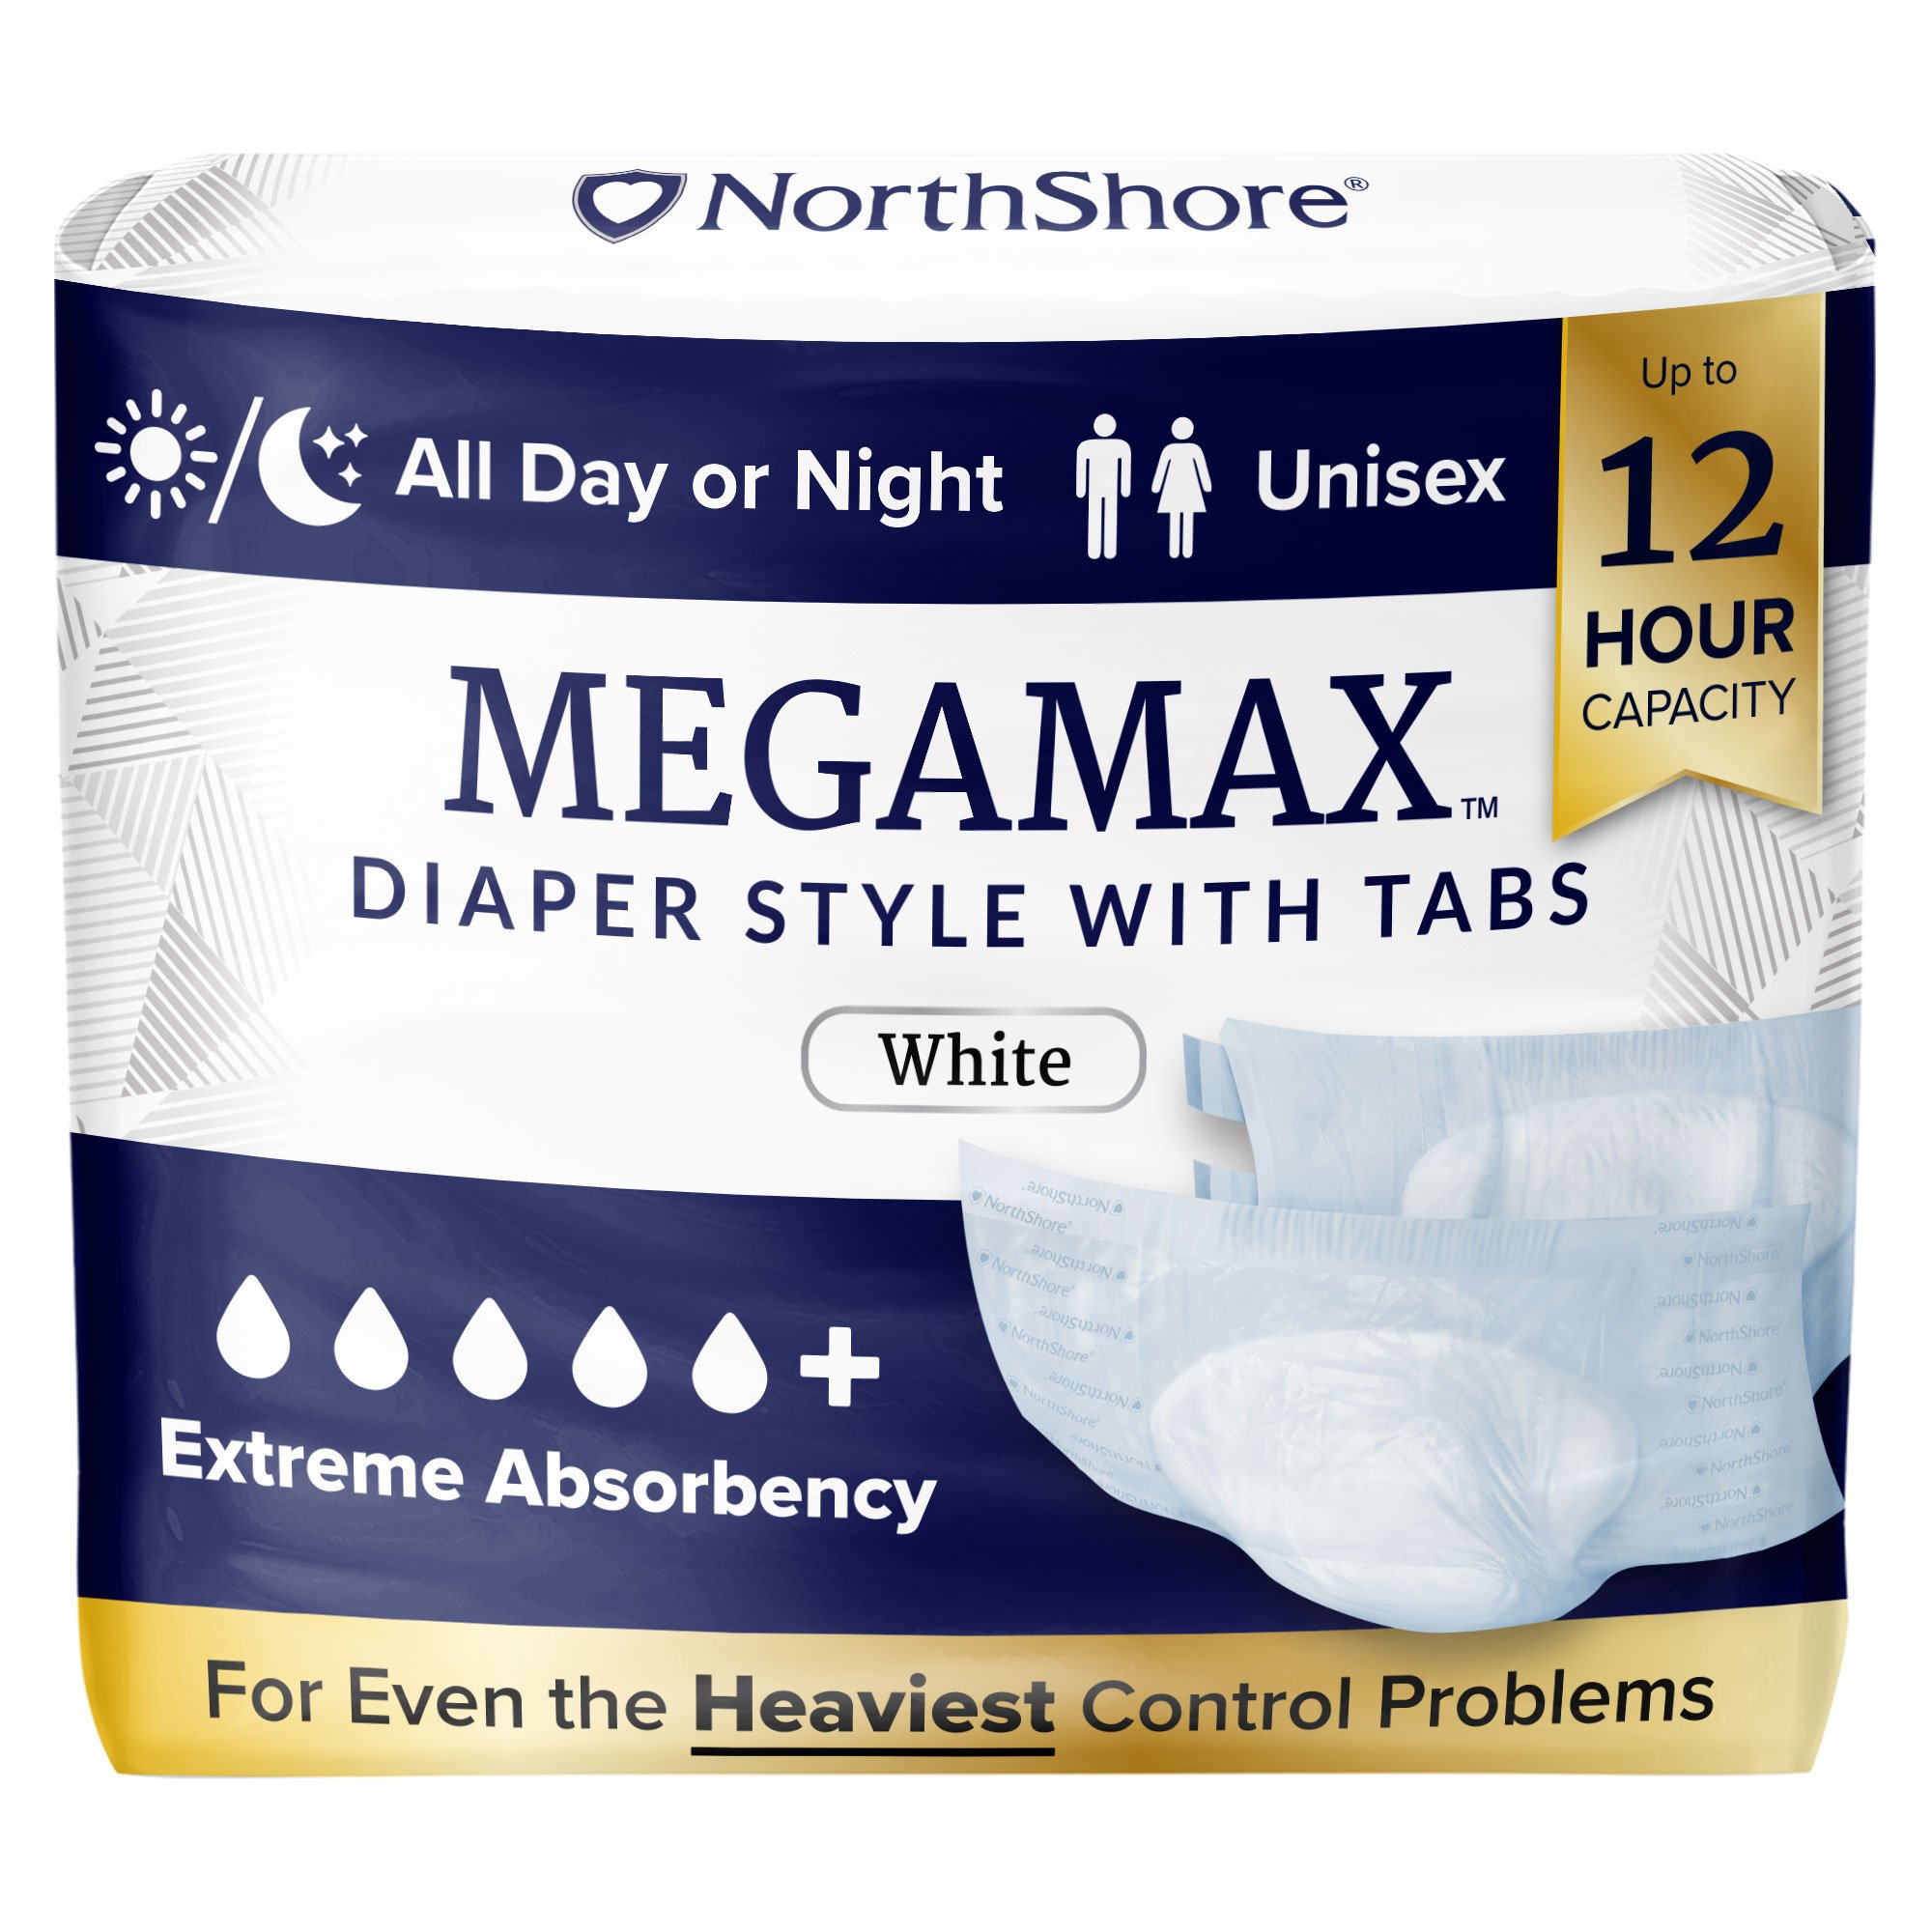 MEGAMAX-White-Pack-No-Size-half.jpg